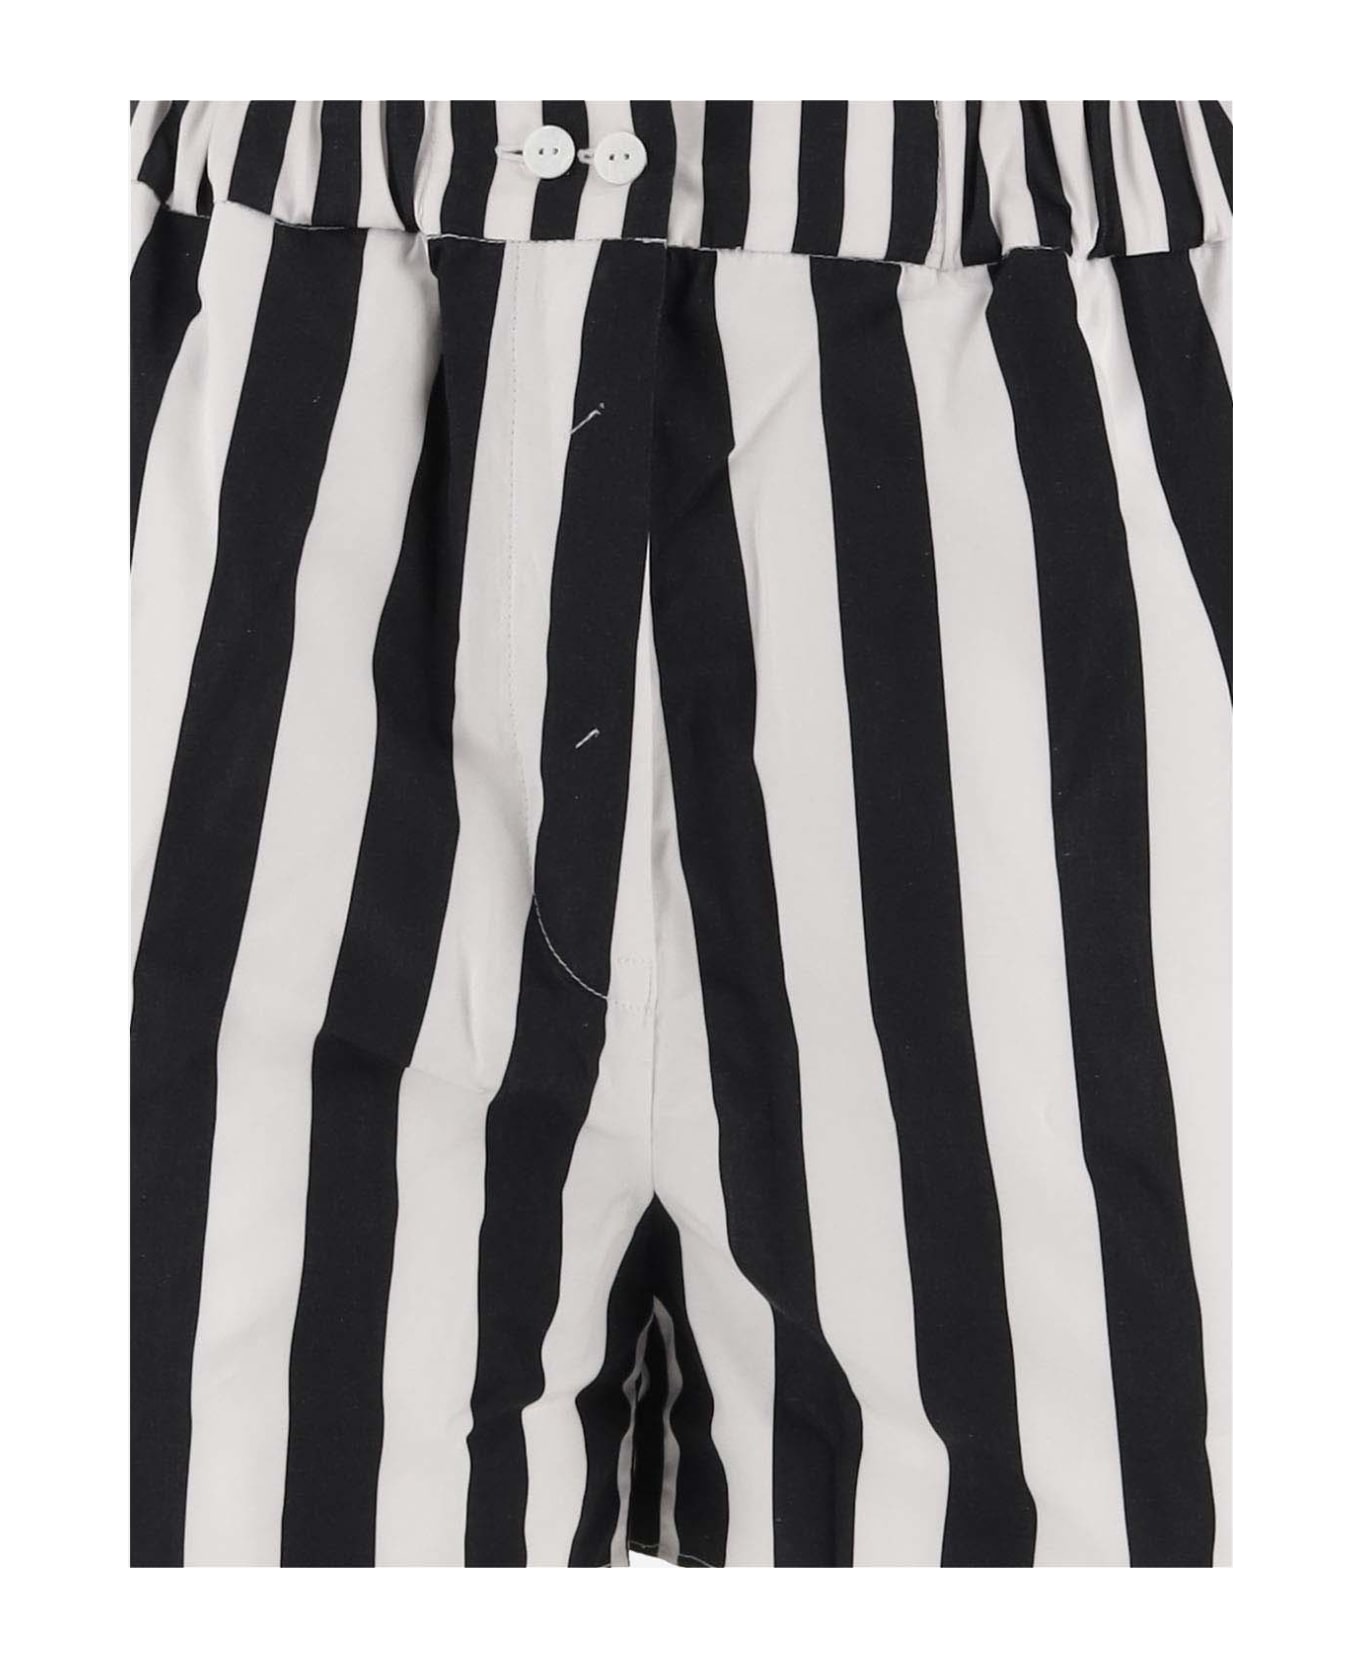 Patou Cotton Shorts With Striped Pattern - MULTICOLOUR